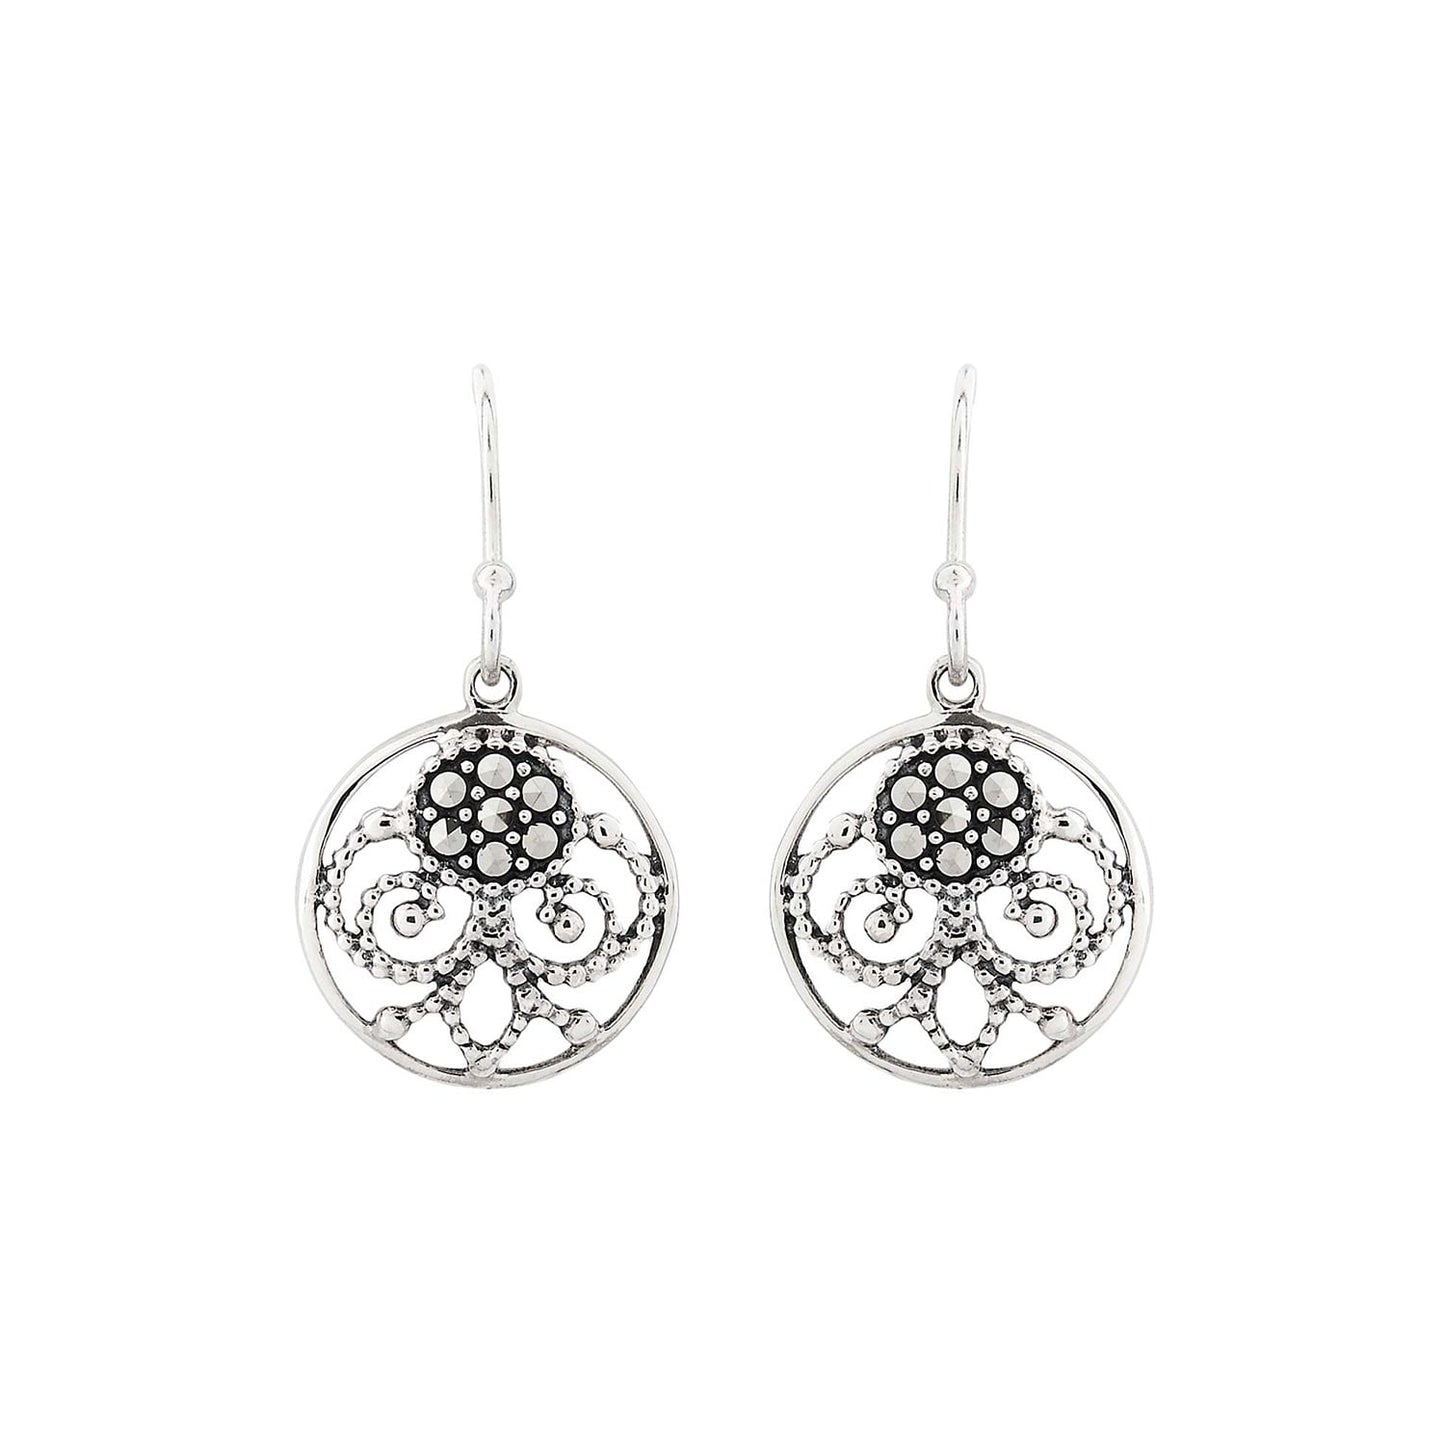 Lulu: Art Nouveau Style Filigree Drop Earrings in Marcasite and Sterling Silver